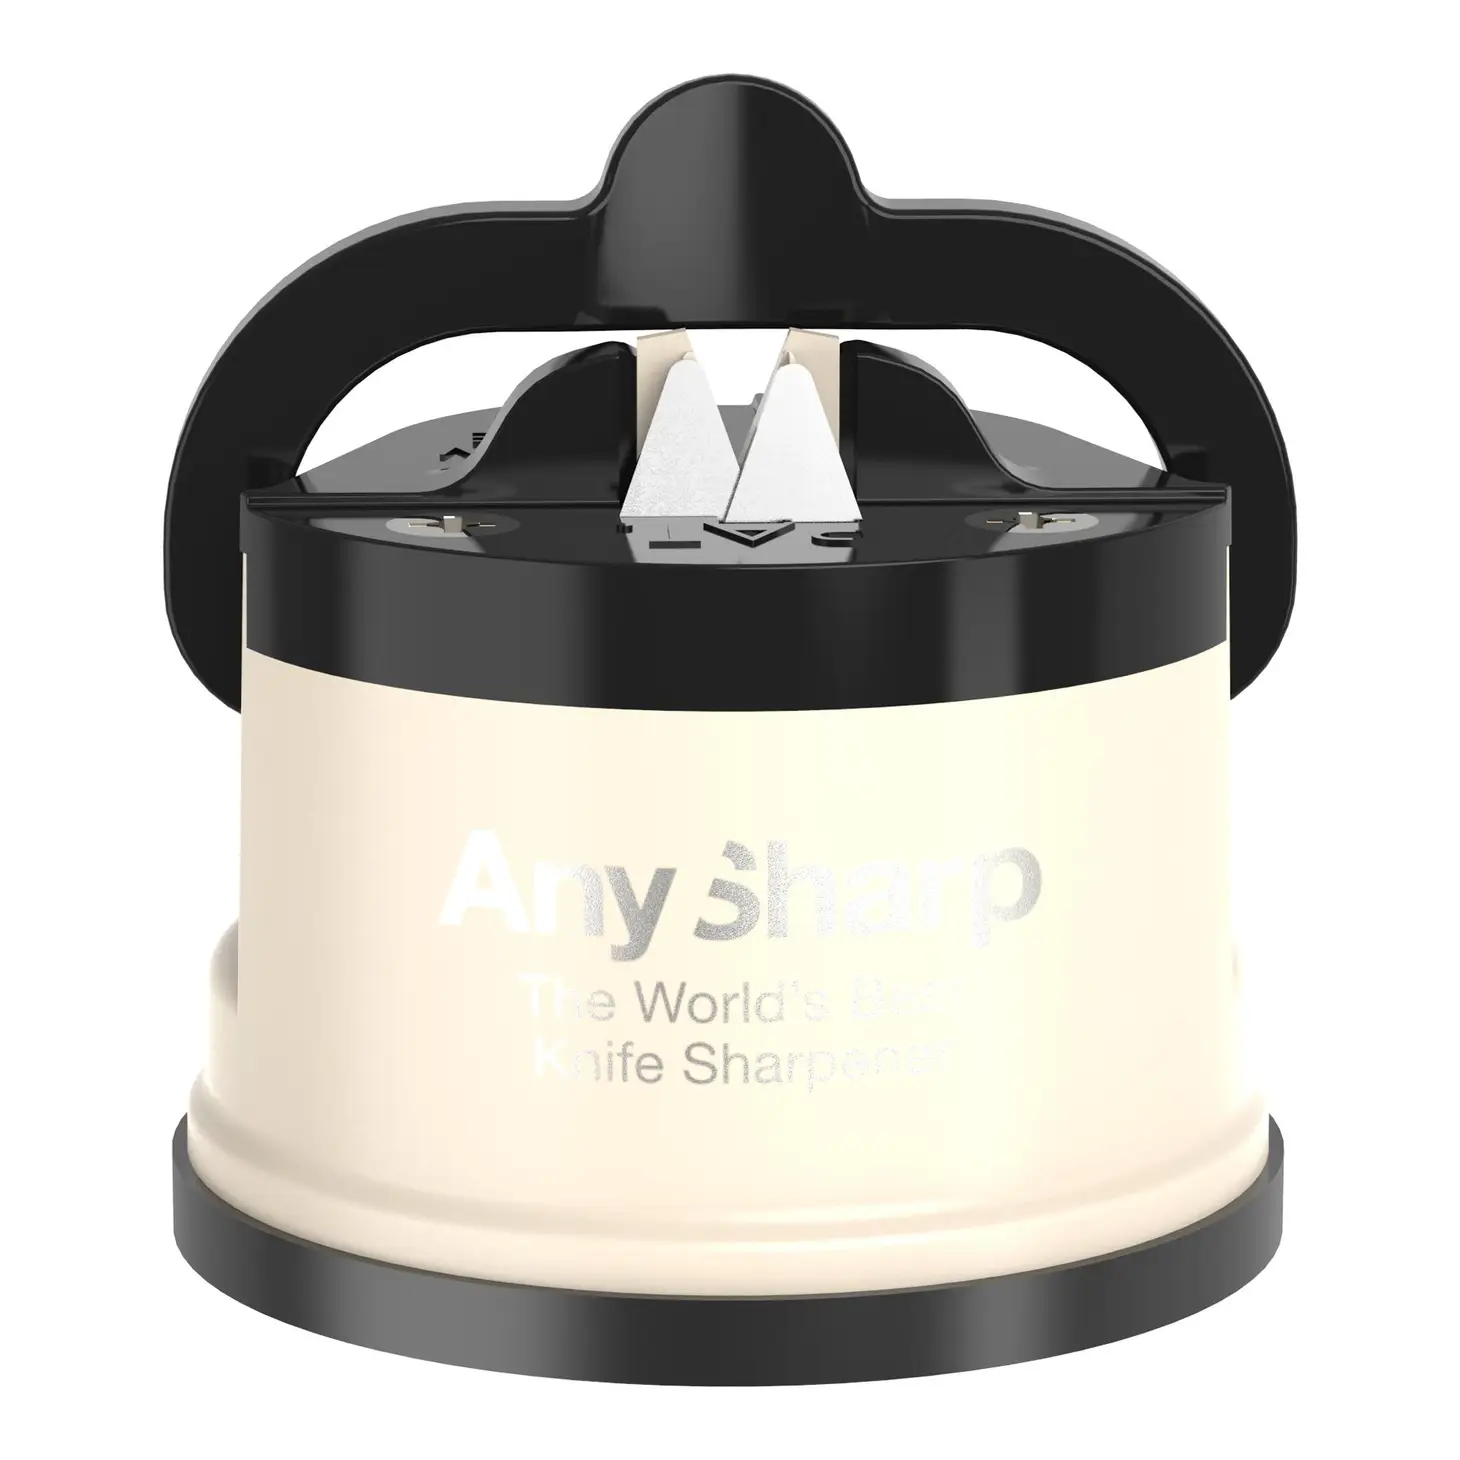 AnySharp Knife Sharpener Pro Color Cream